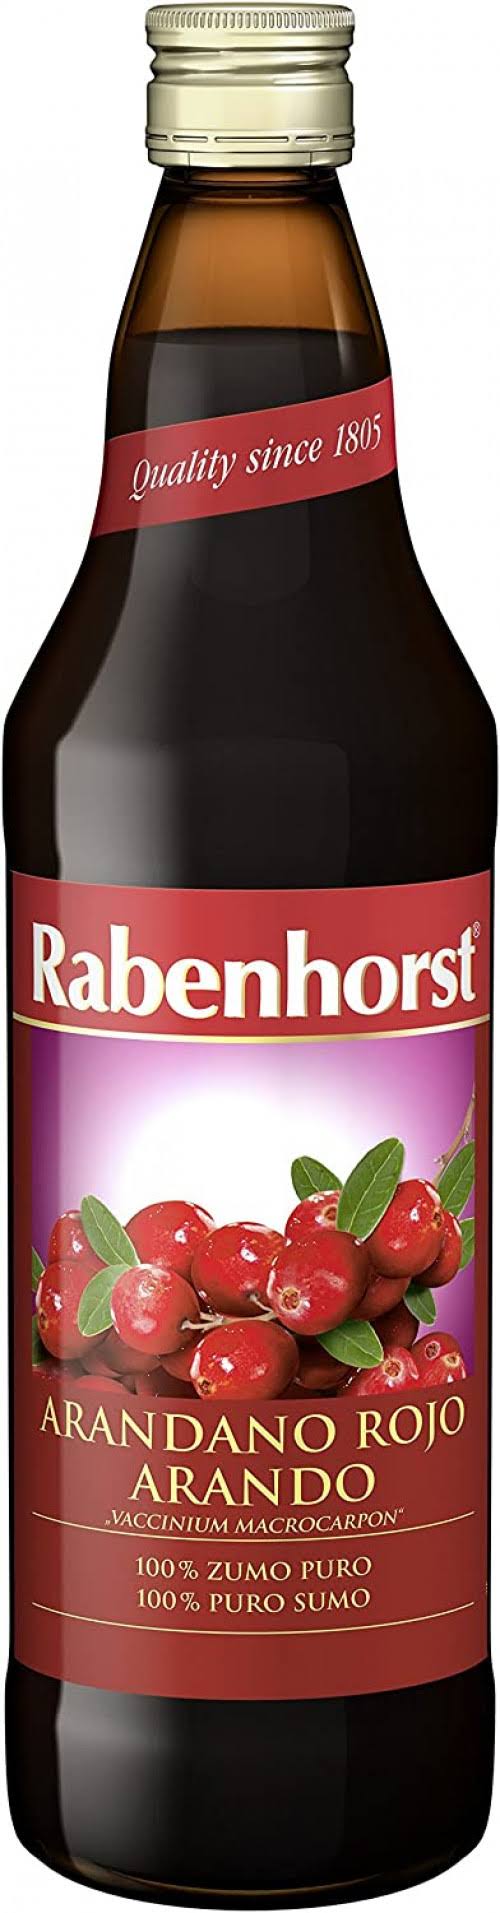 Rabenhorst Cranberry Juice - 750ml